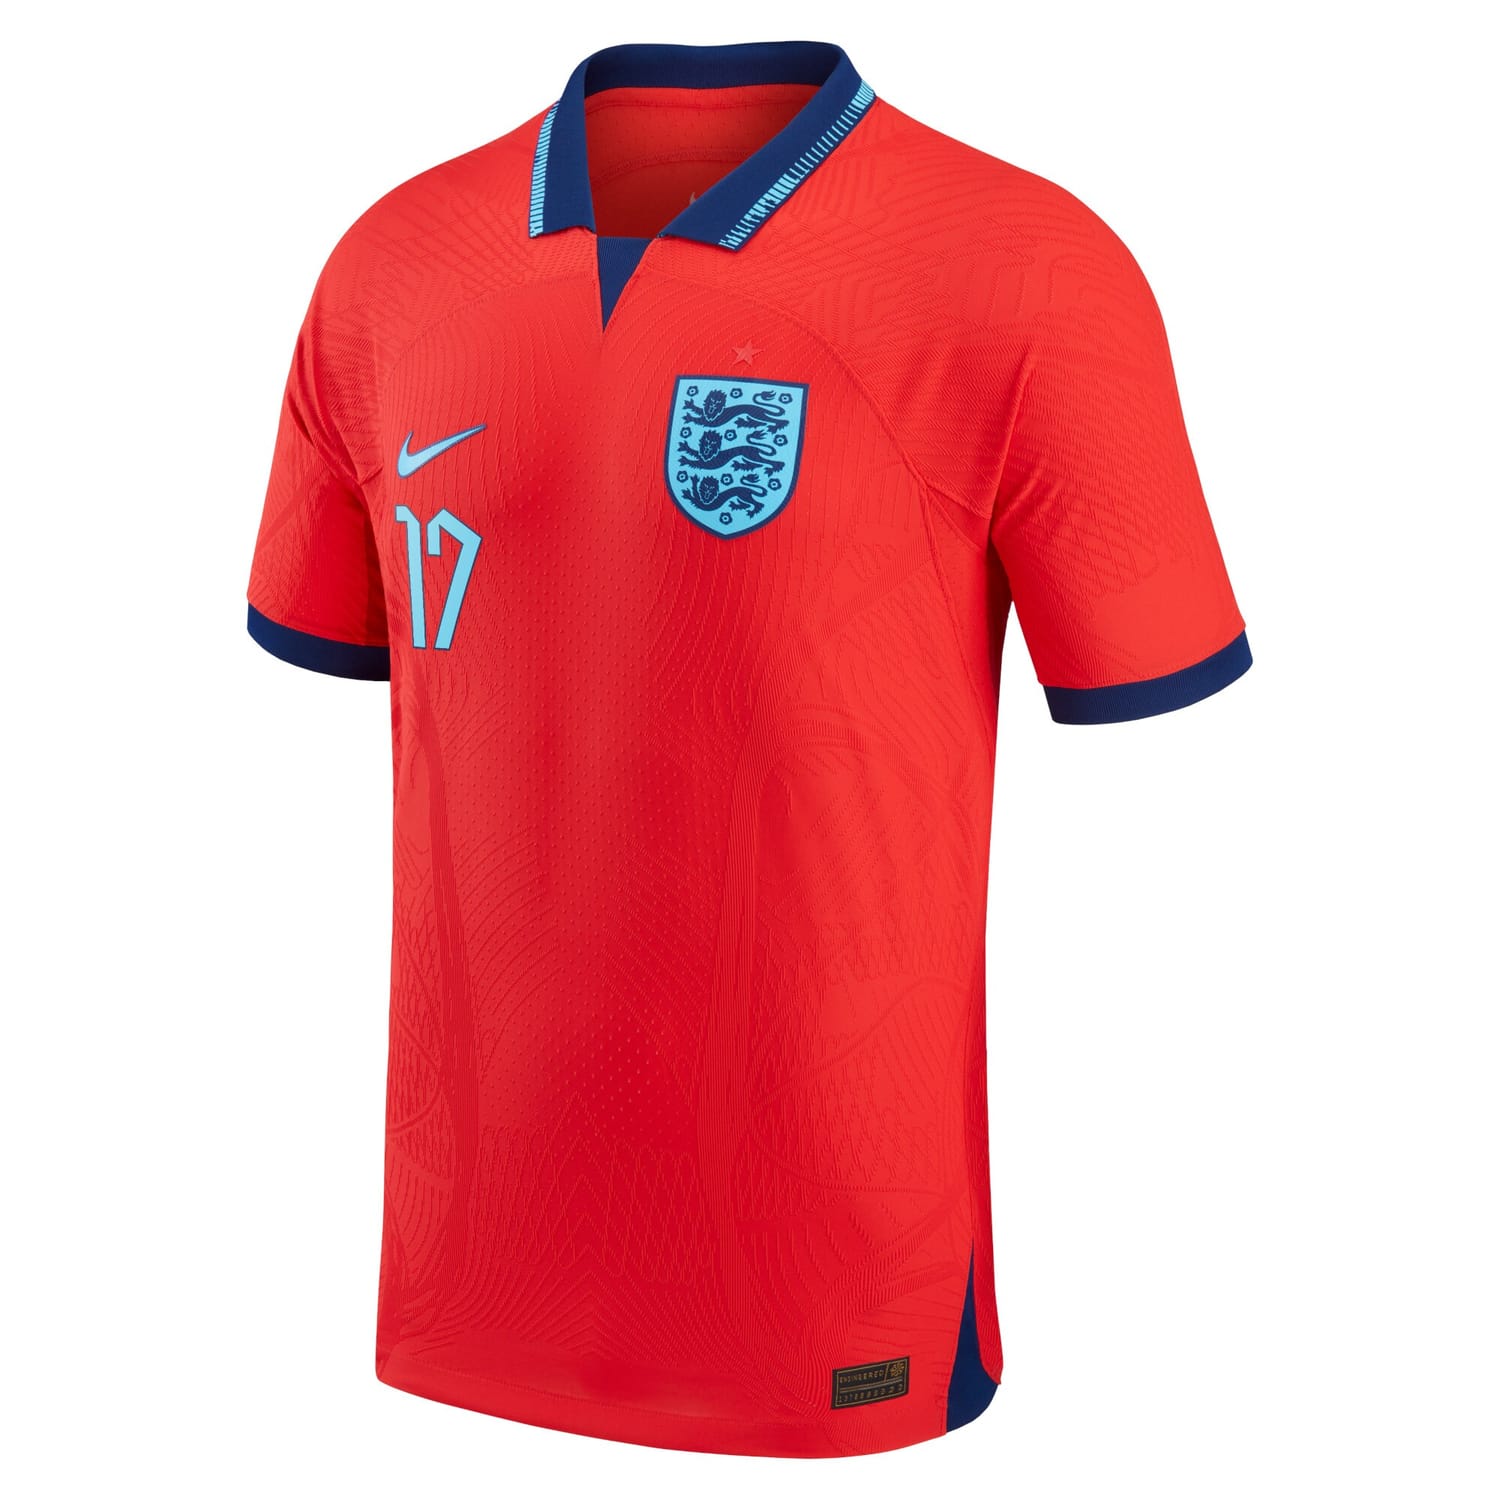 England National Team Away Authentic Jersey Shirt 2022 player Bukayo Saka 17 printing for Men